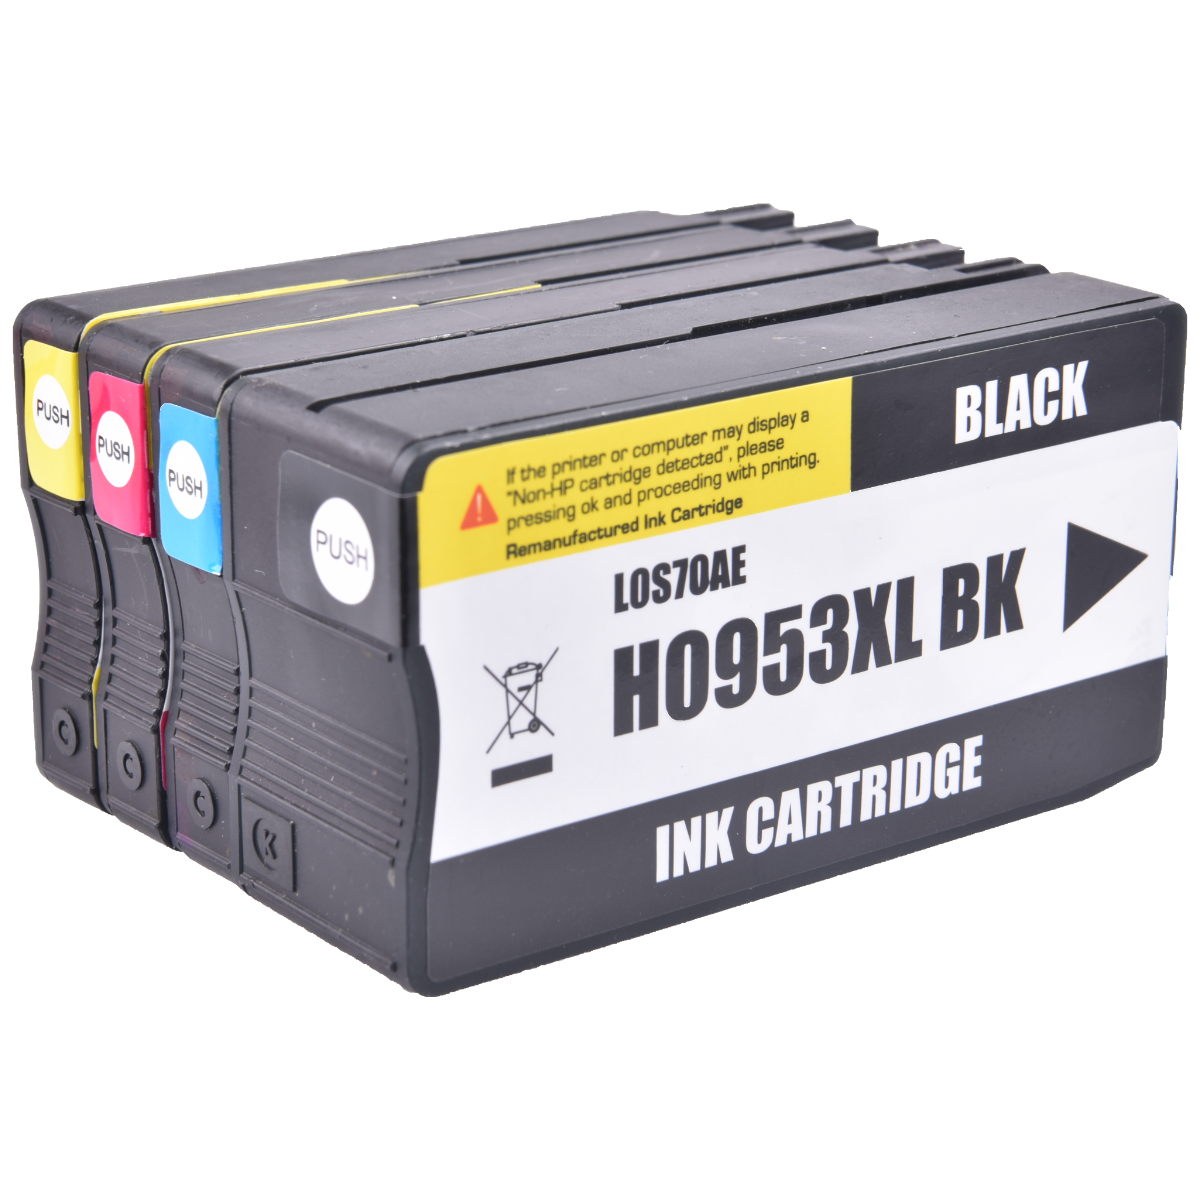 HP 953 Ink Cartridges CMYK for OfficeJet Pro 8710 8715 8716 8720 8210